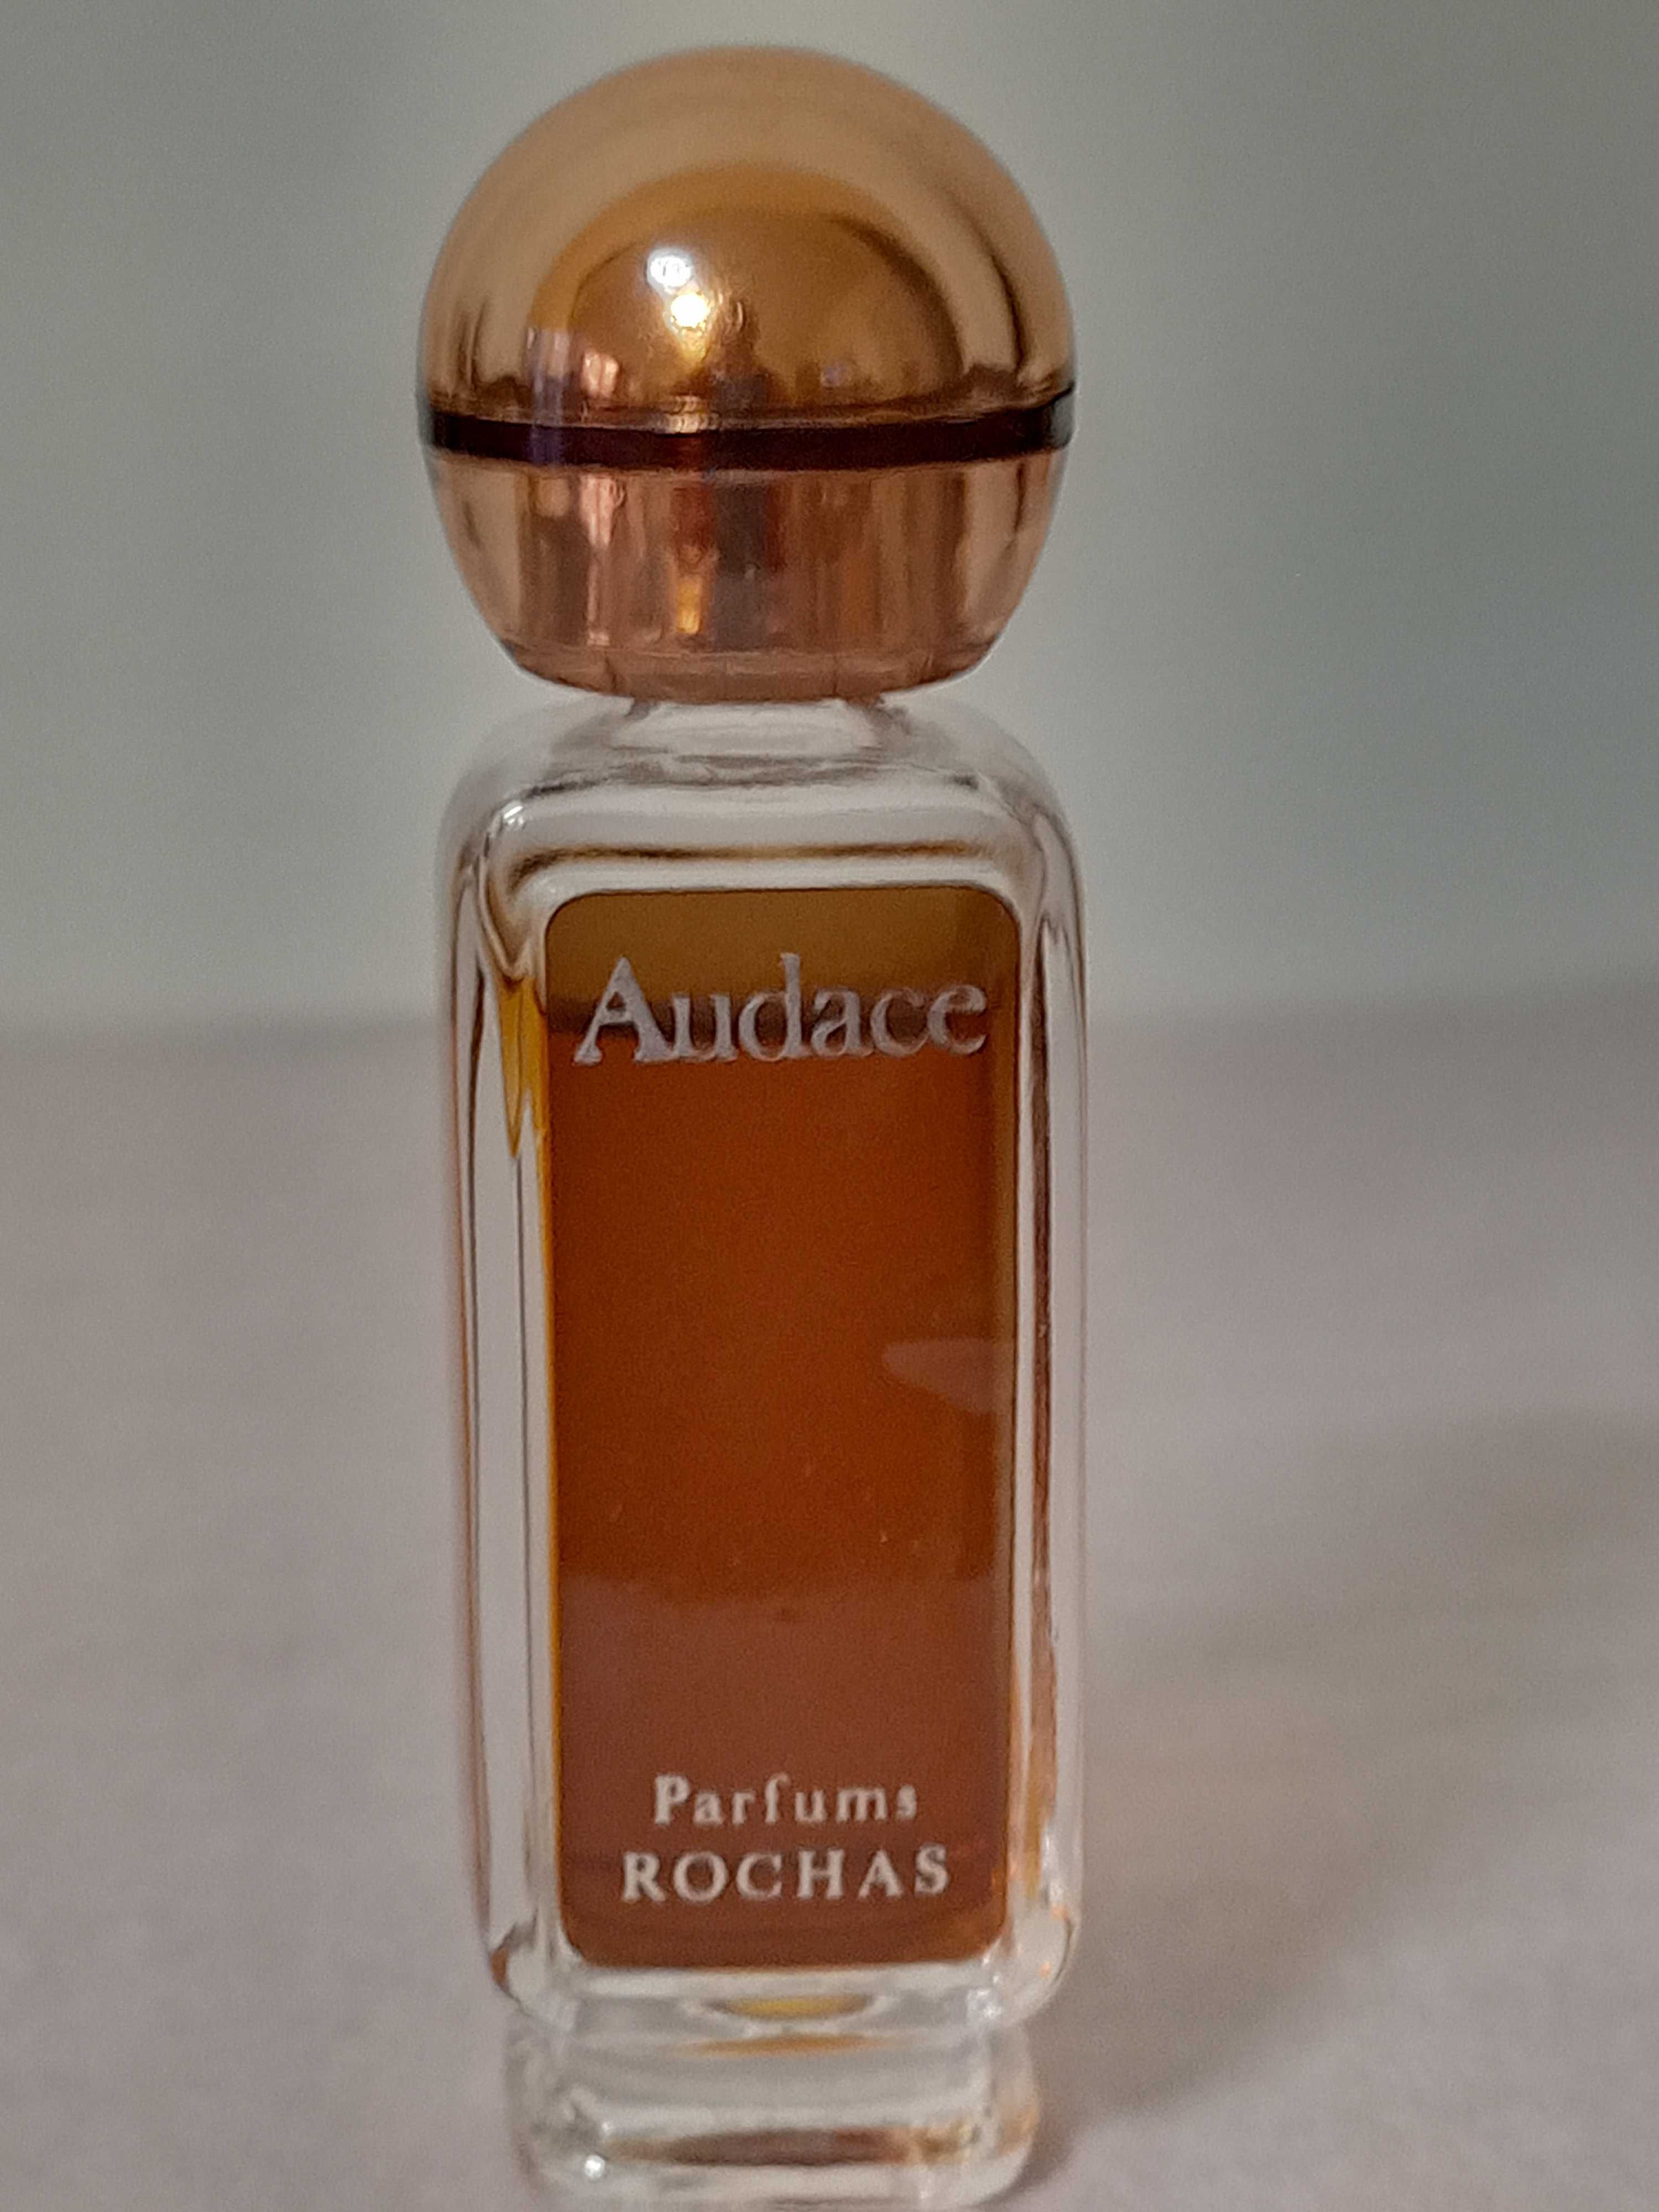 Halston Woman,Audace perfume Rochas,Pierre Cardin Choc de Cardin